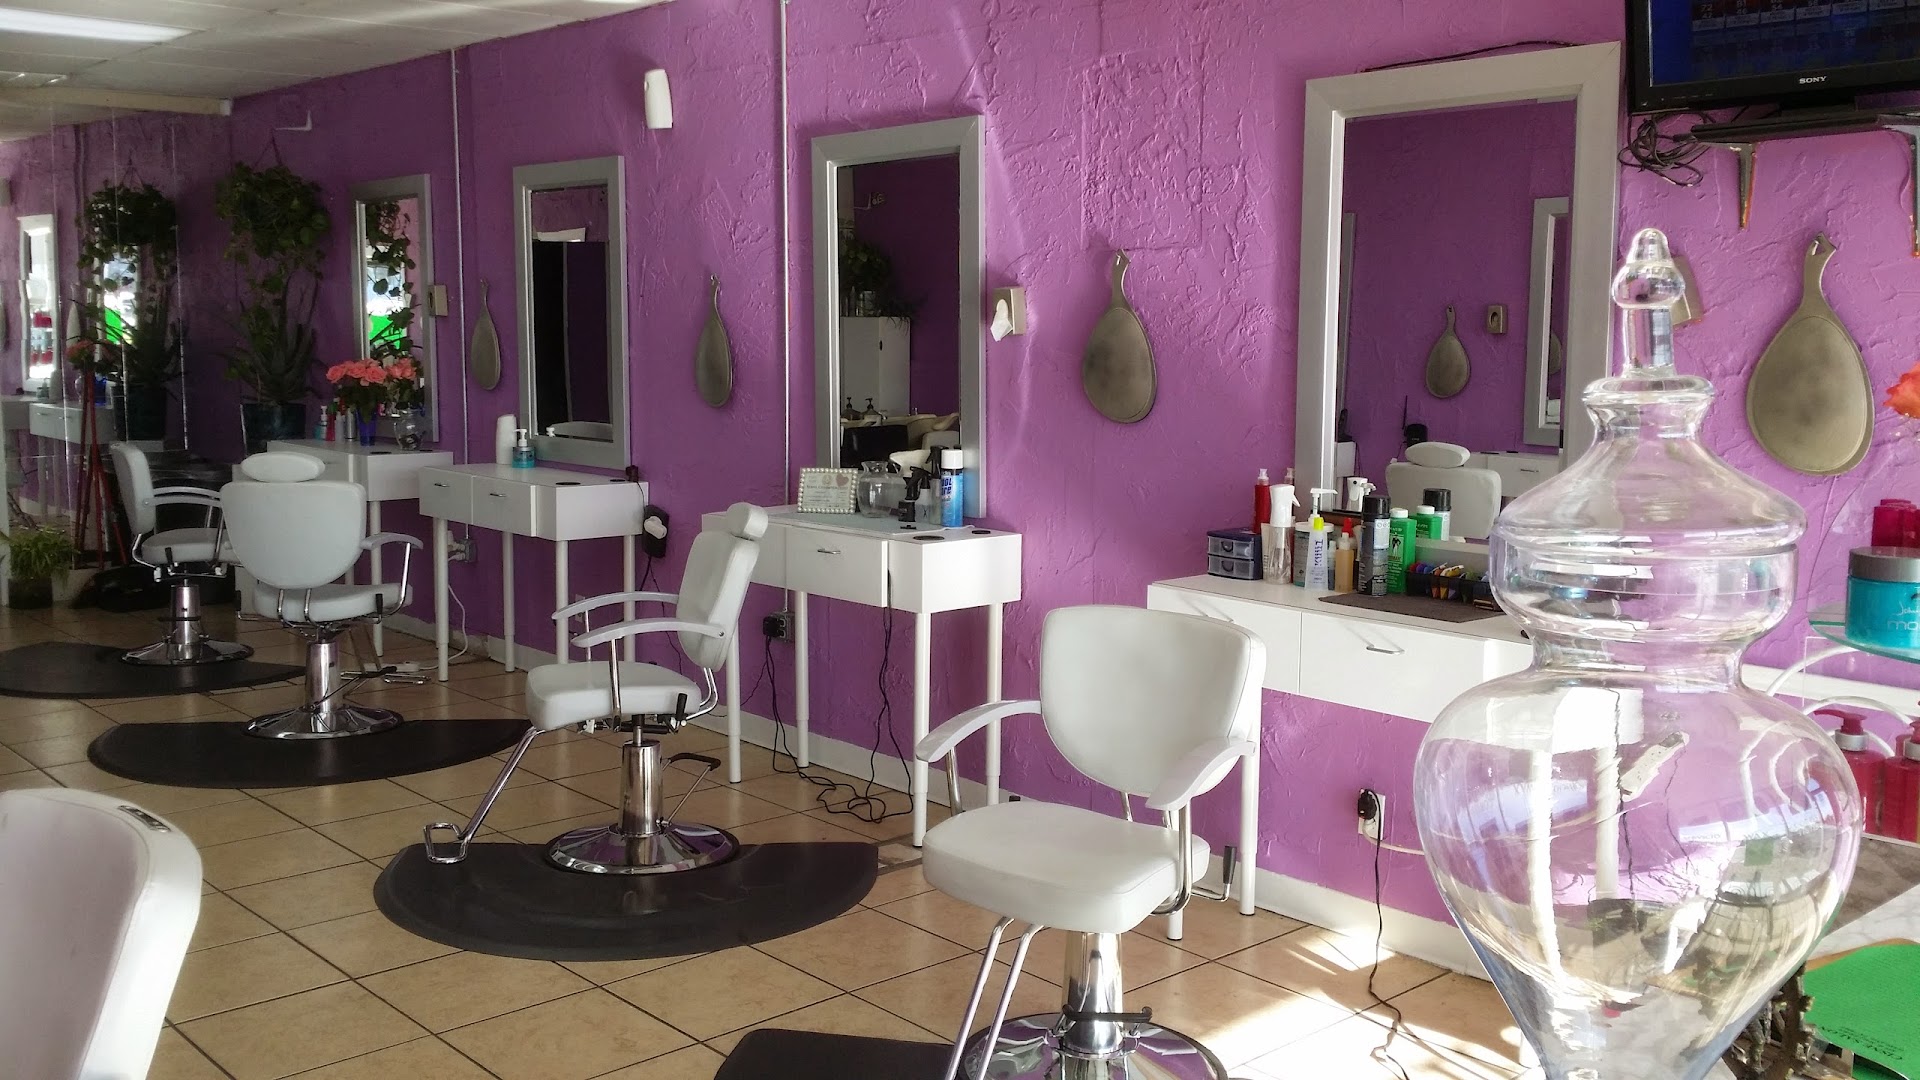 Cisne Beauty Salon